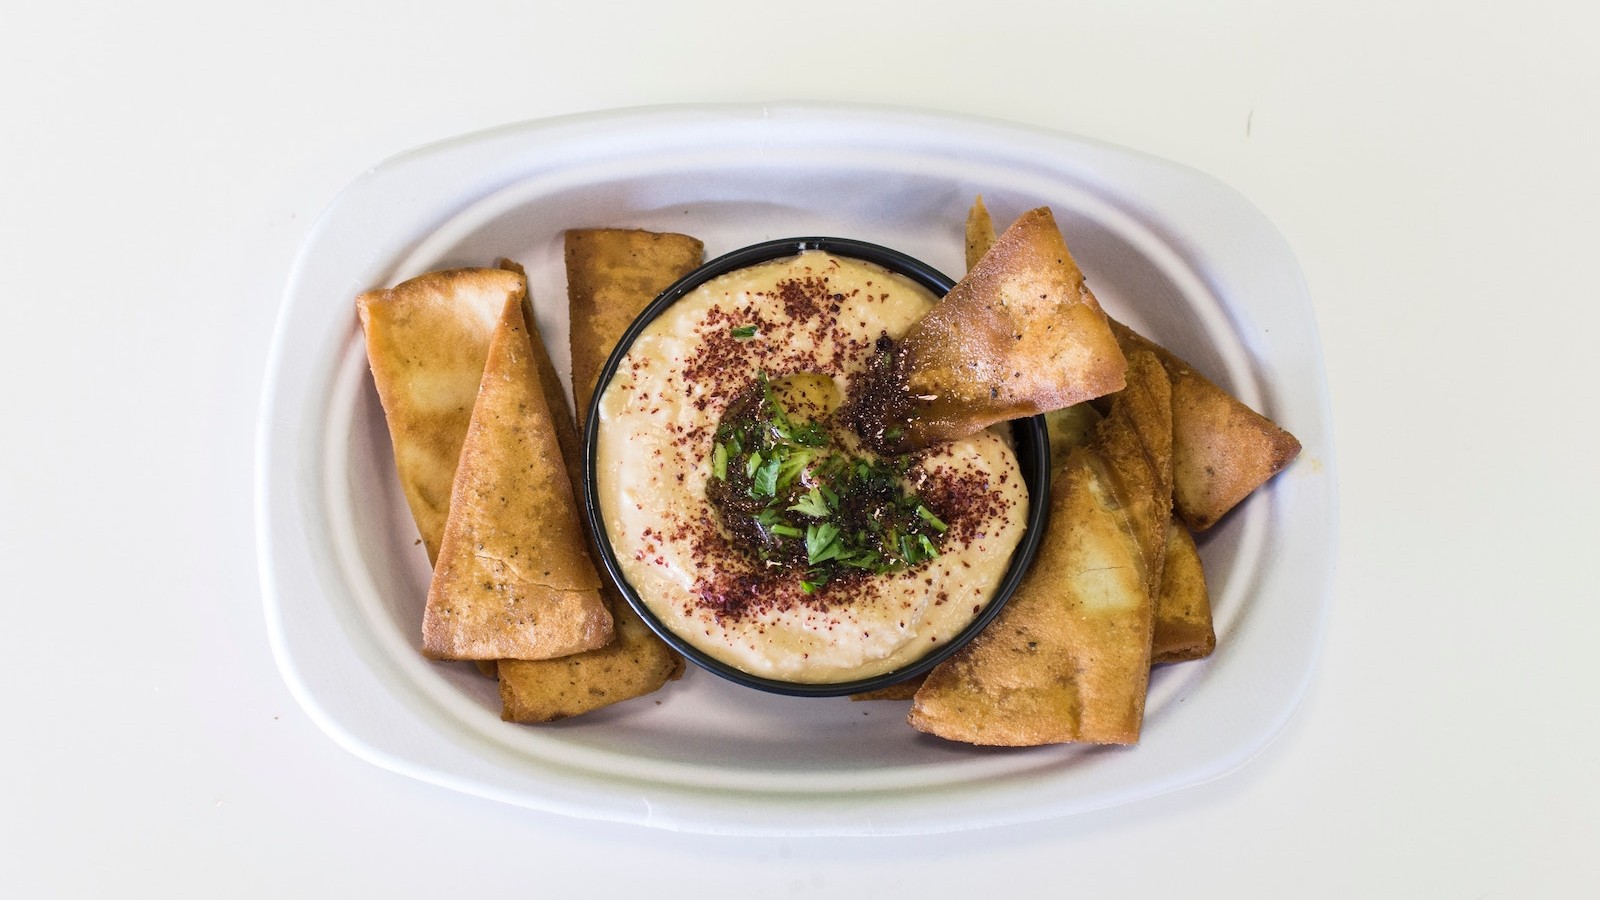 Image of Fustini's Hummus and Pita Chips